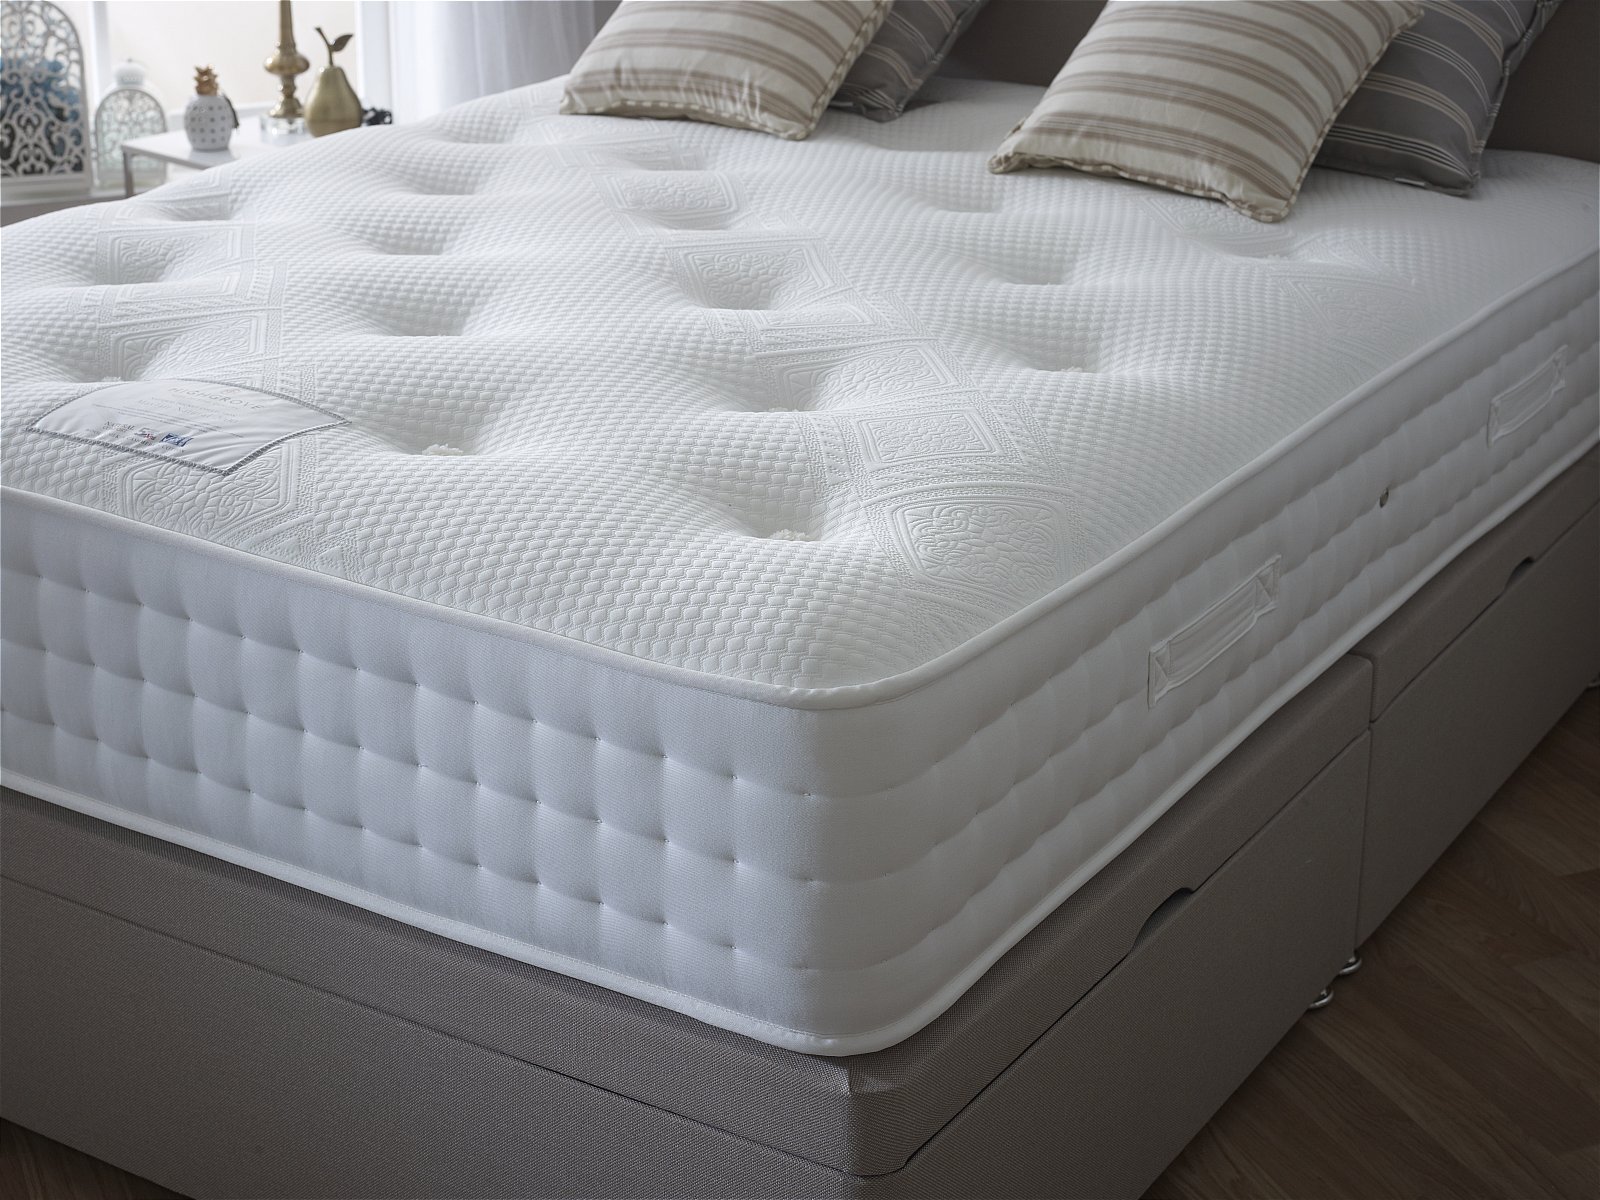 highgrove vicuna mattress reviews